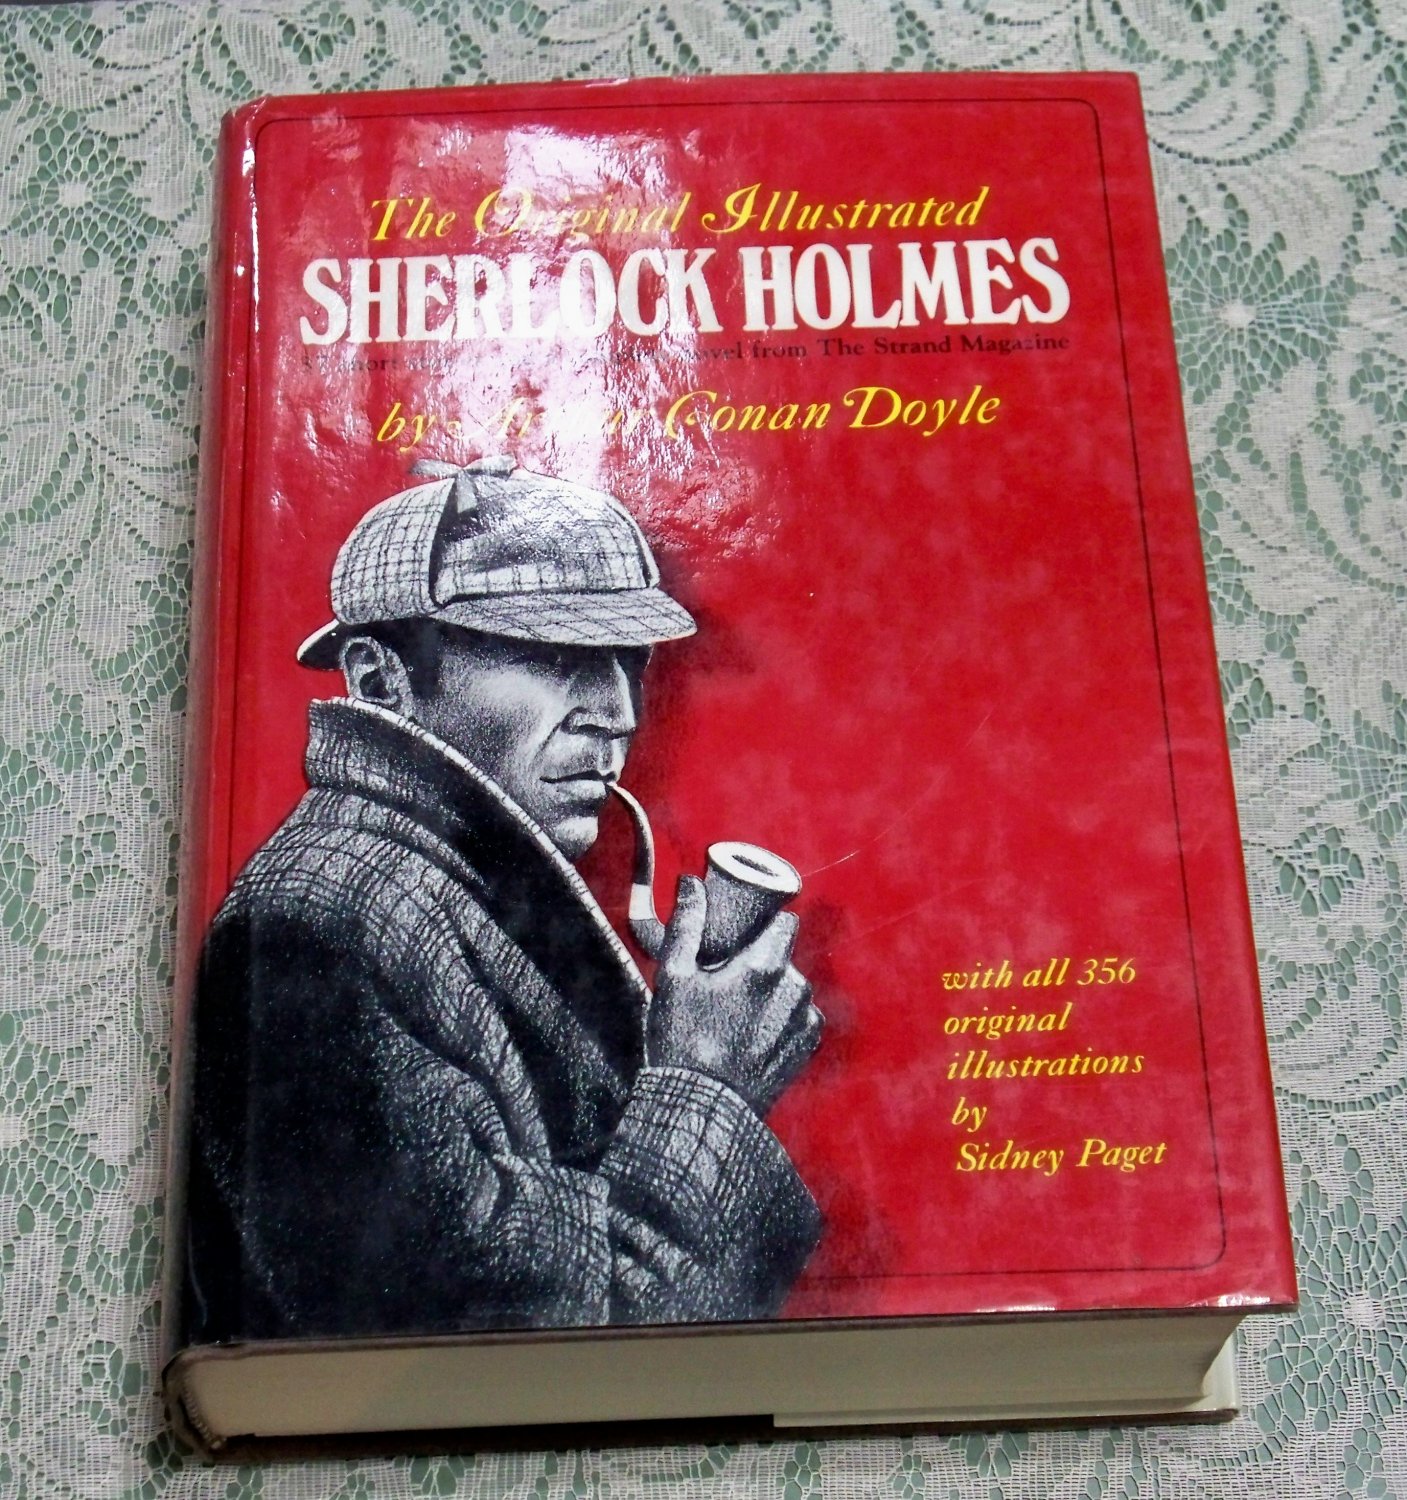 The Annotated Sherlock Holmes by Arthur Conan Doyle